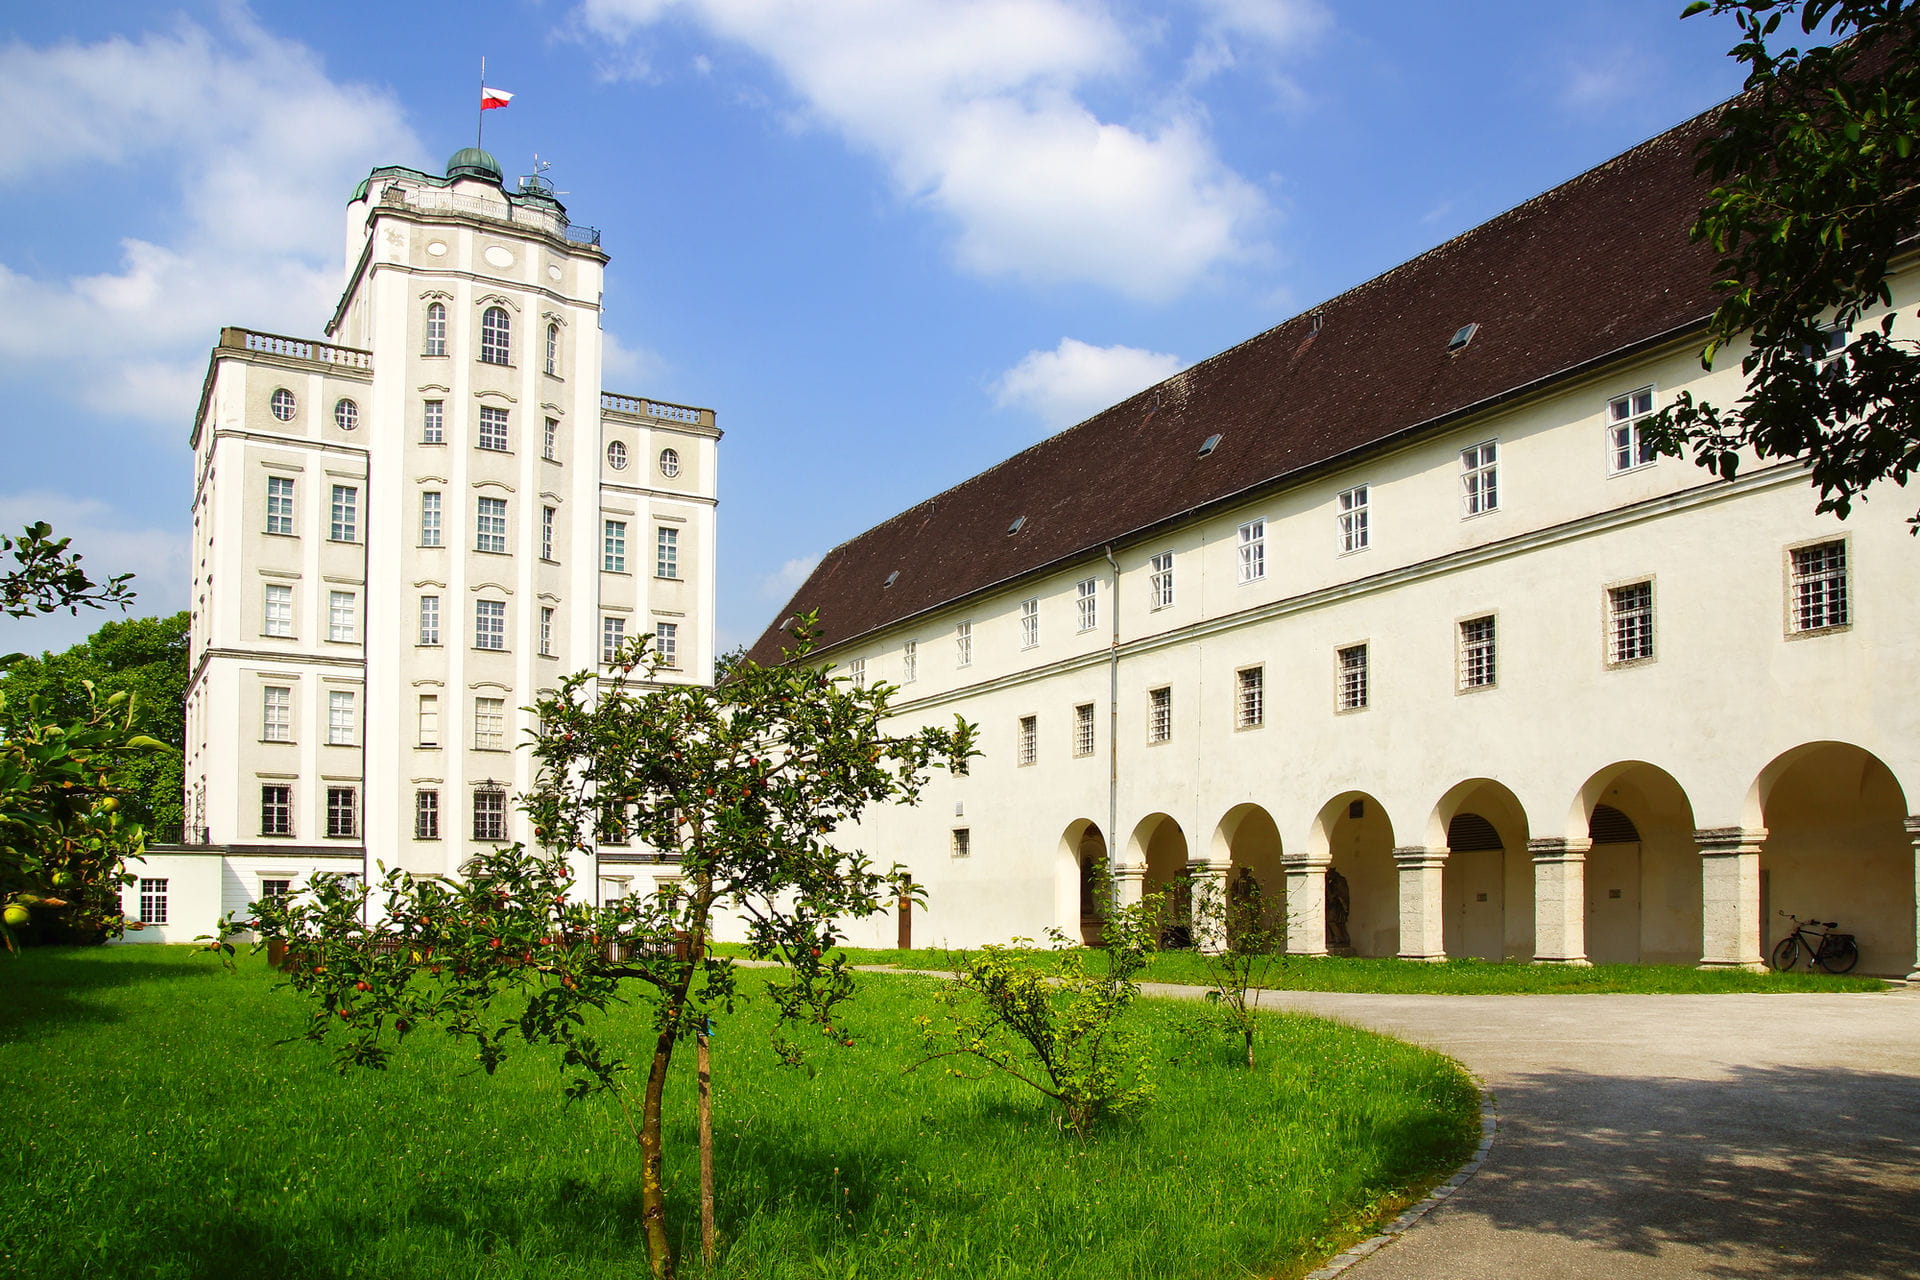 High quality hoto of Kremsmunster abbey - Austria